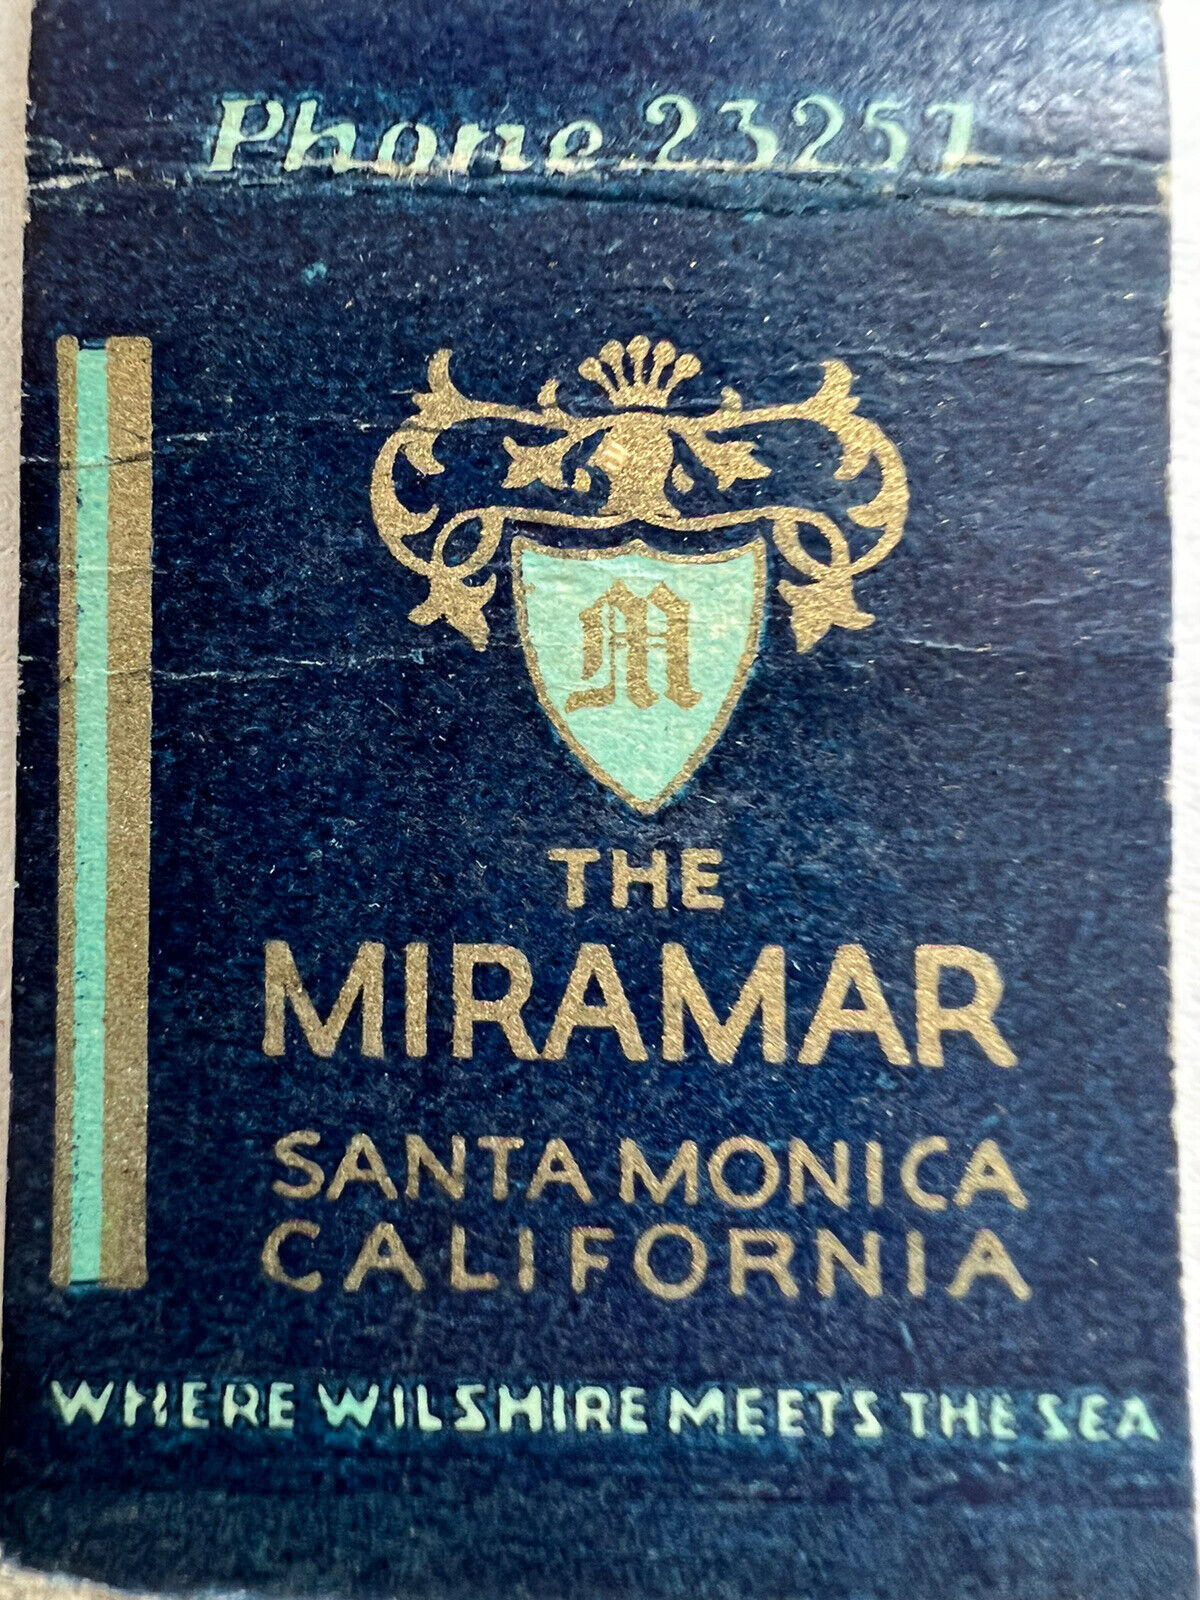 Miramar Hotel Matchbook Cover Santa Monica California Bunglaows Hollywood Stars